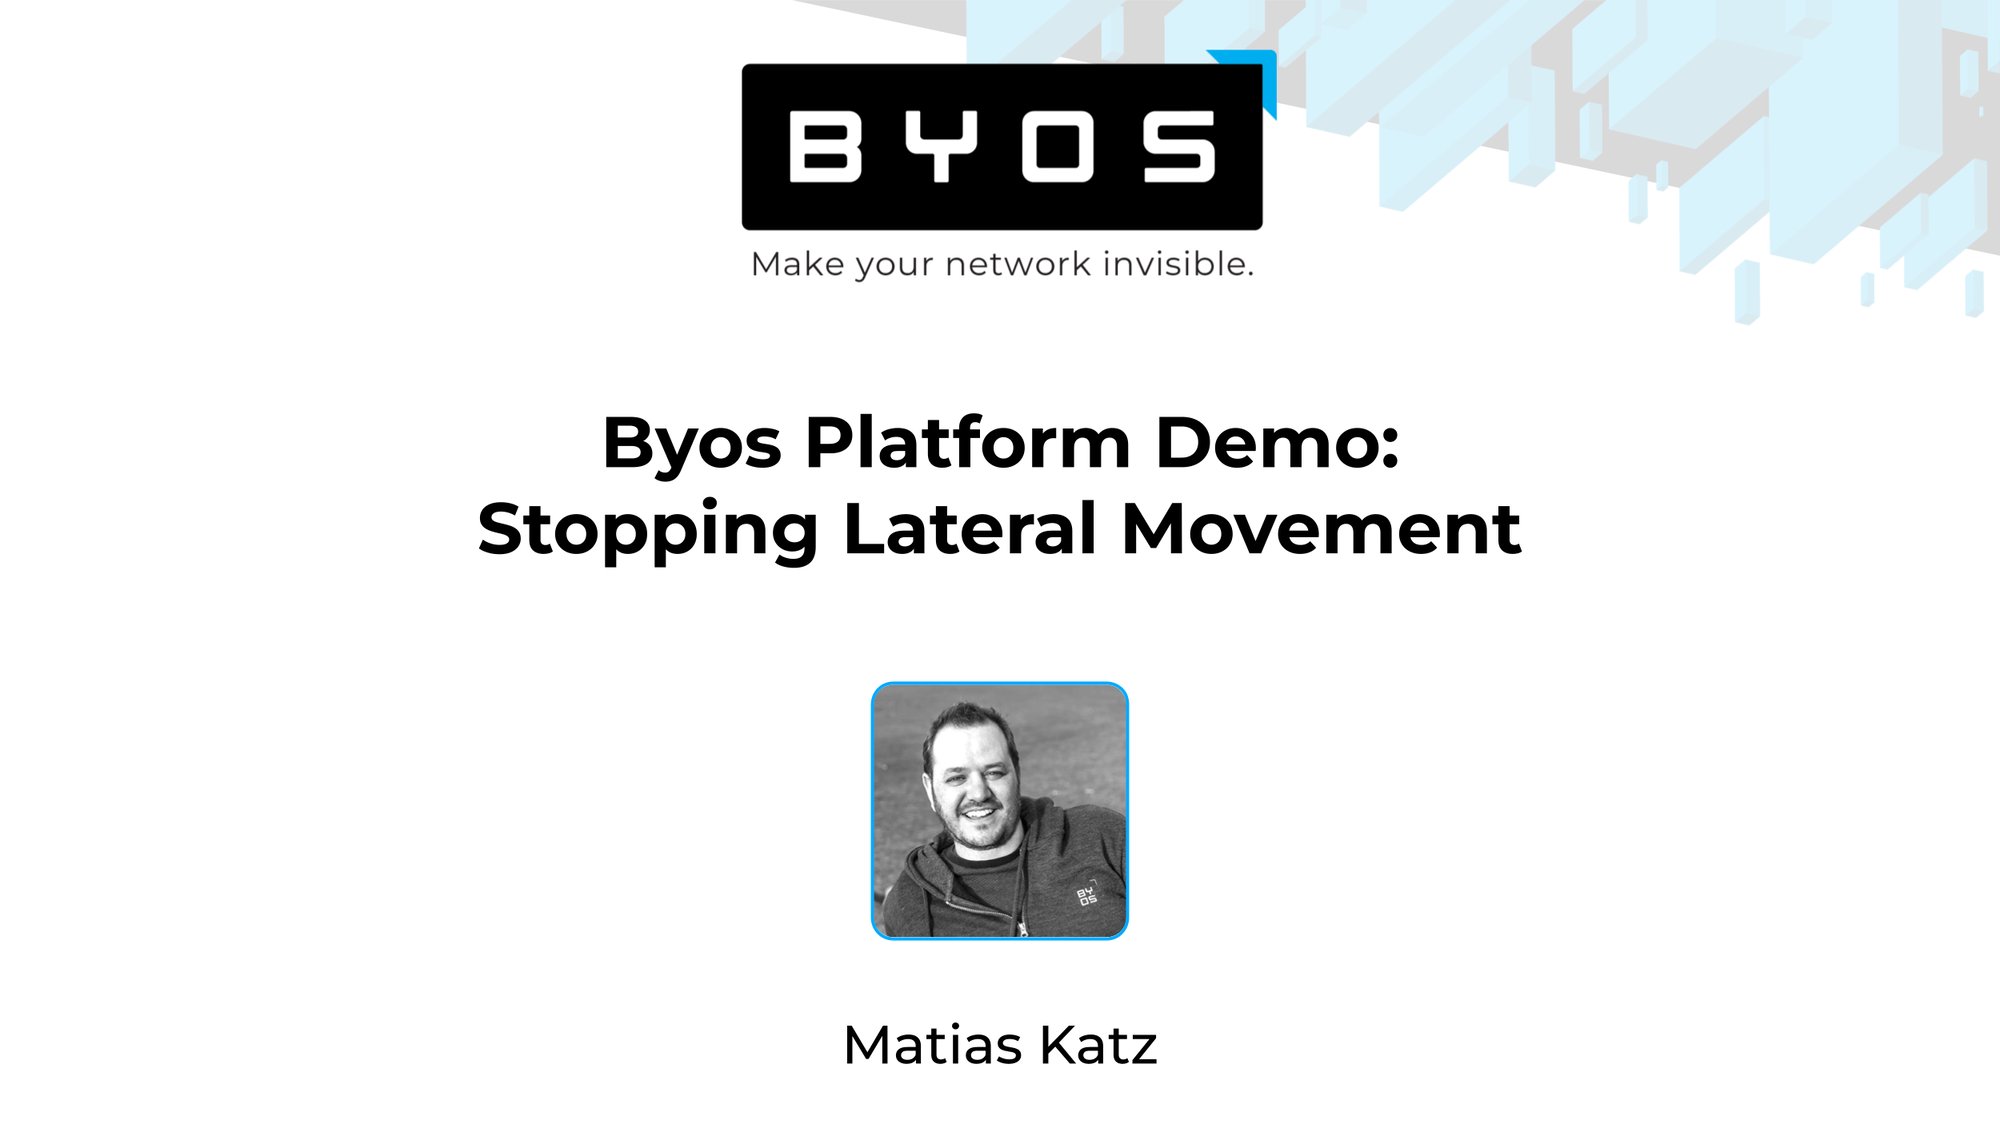 Full Byos Platform Demo: Stopping Lateral Movement